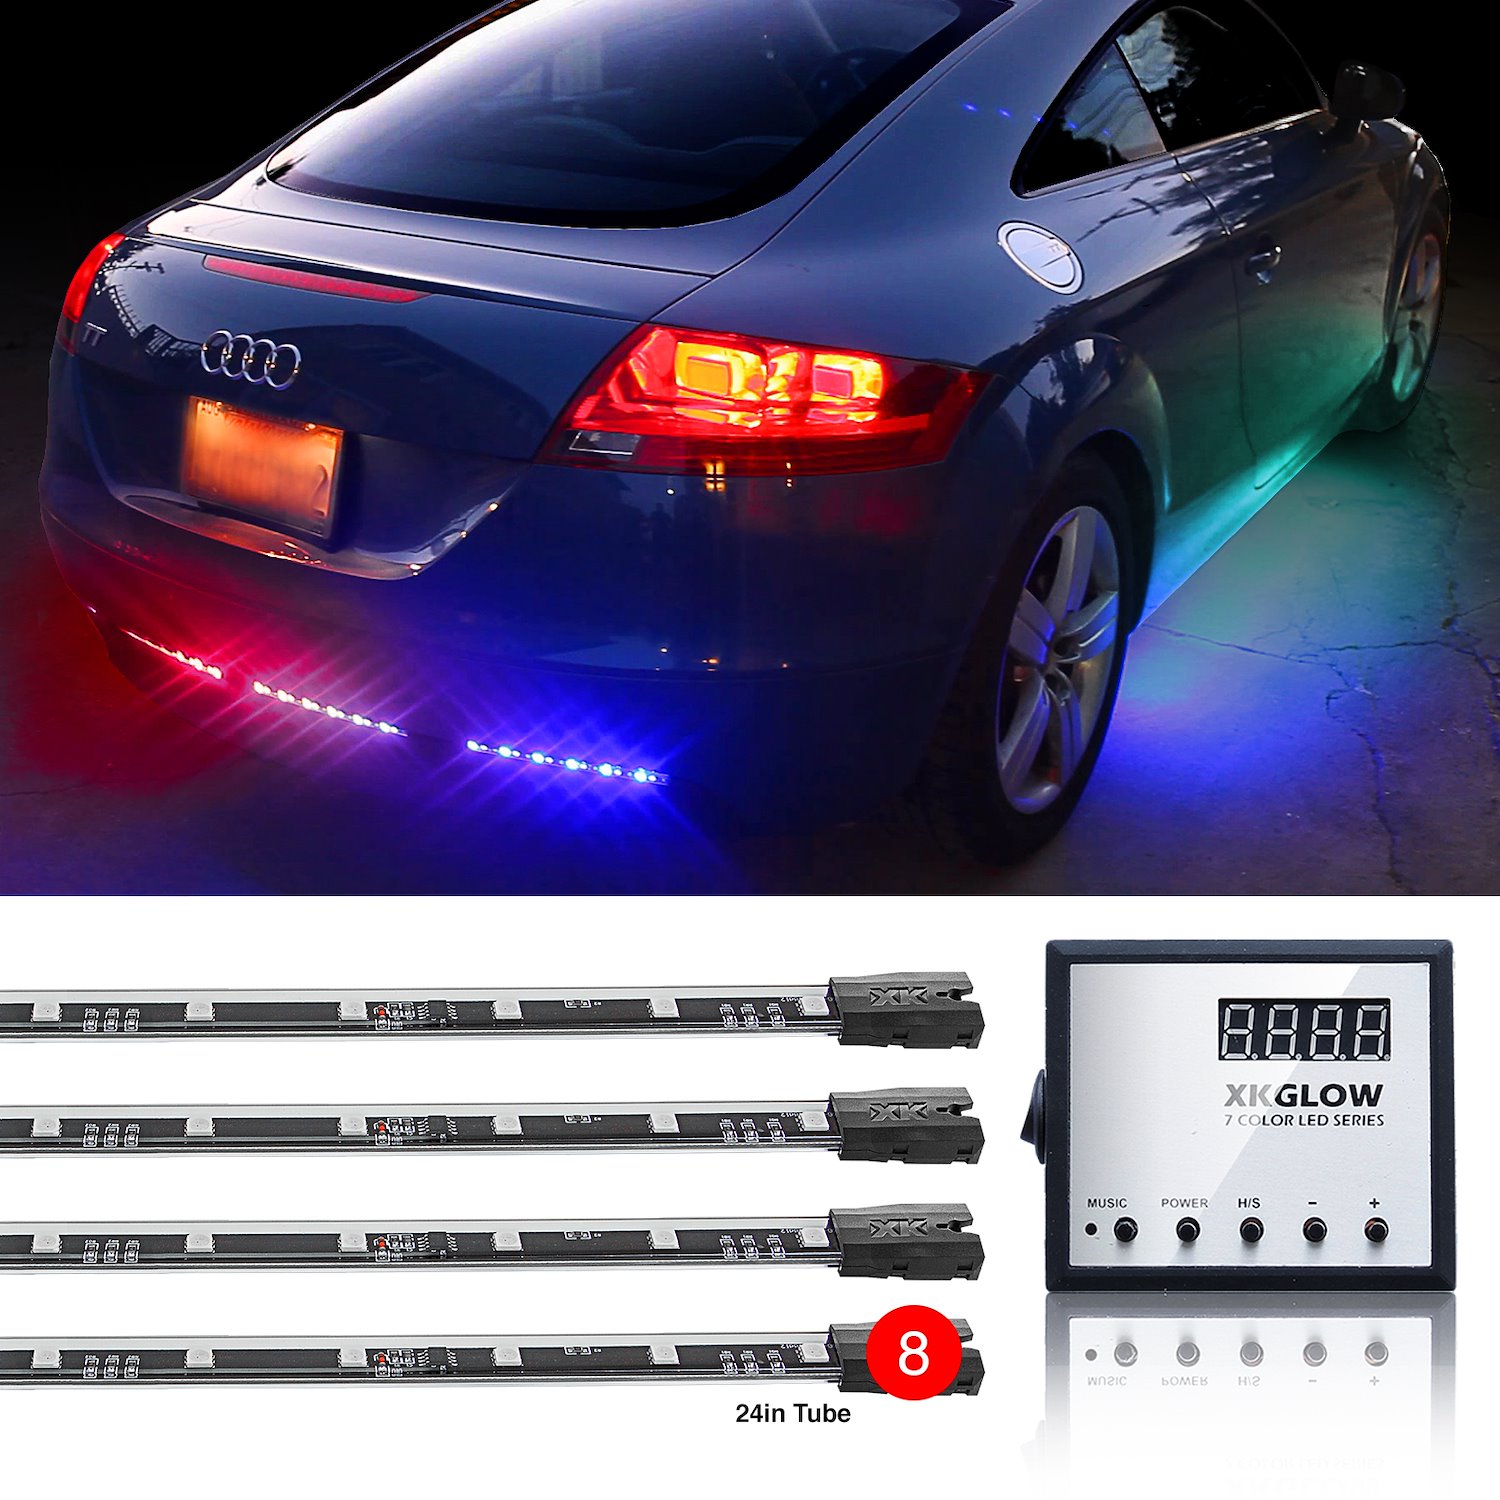 XK041006 8 x 24 in. Tubes 3-Million Color XKGLOW LED Accent Light Car/Truck Kit, Universal Fit